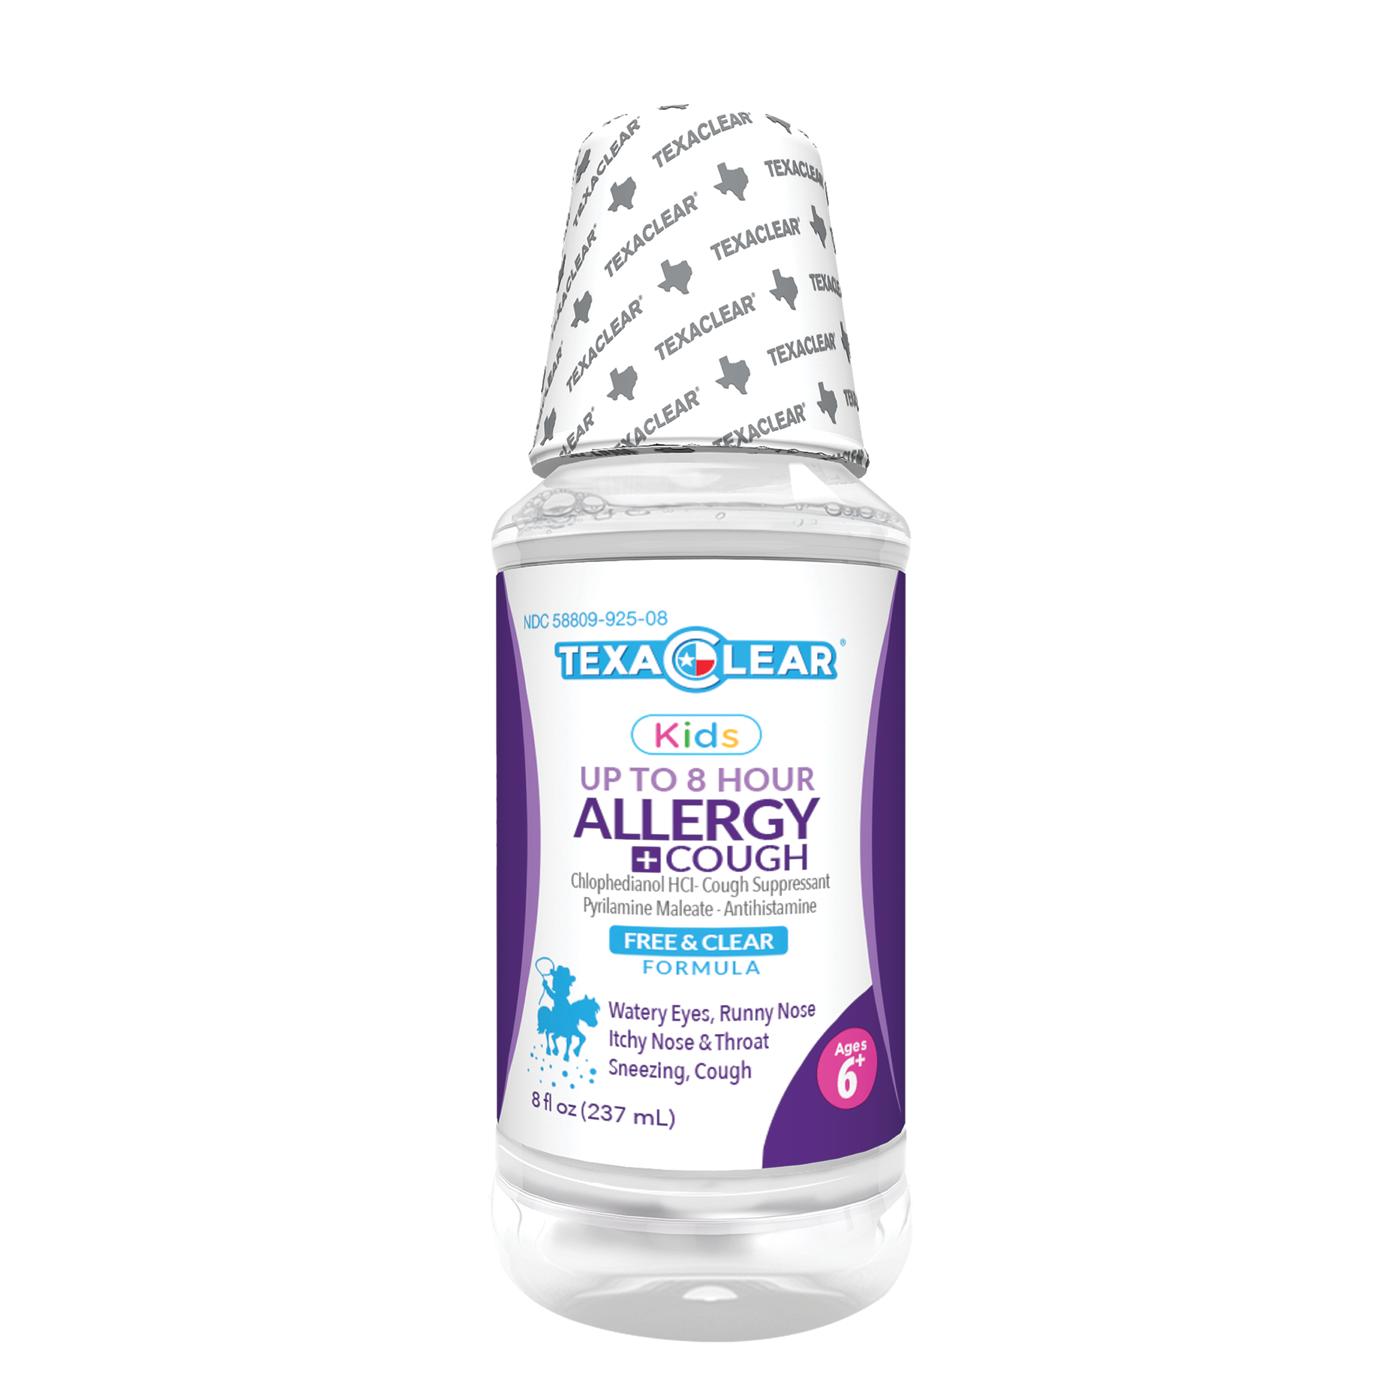 TexaClear Kids Allergy Relief Liquid; image 1 of 3